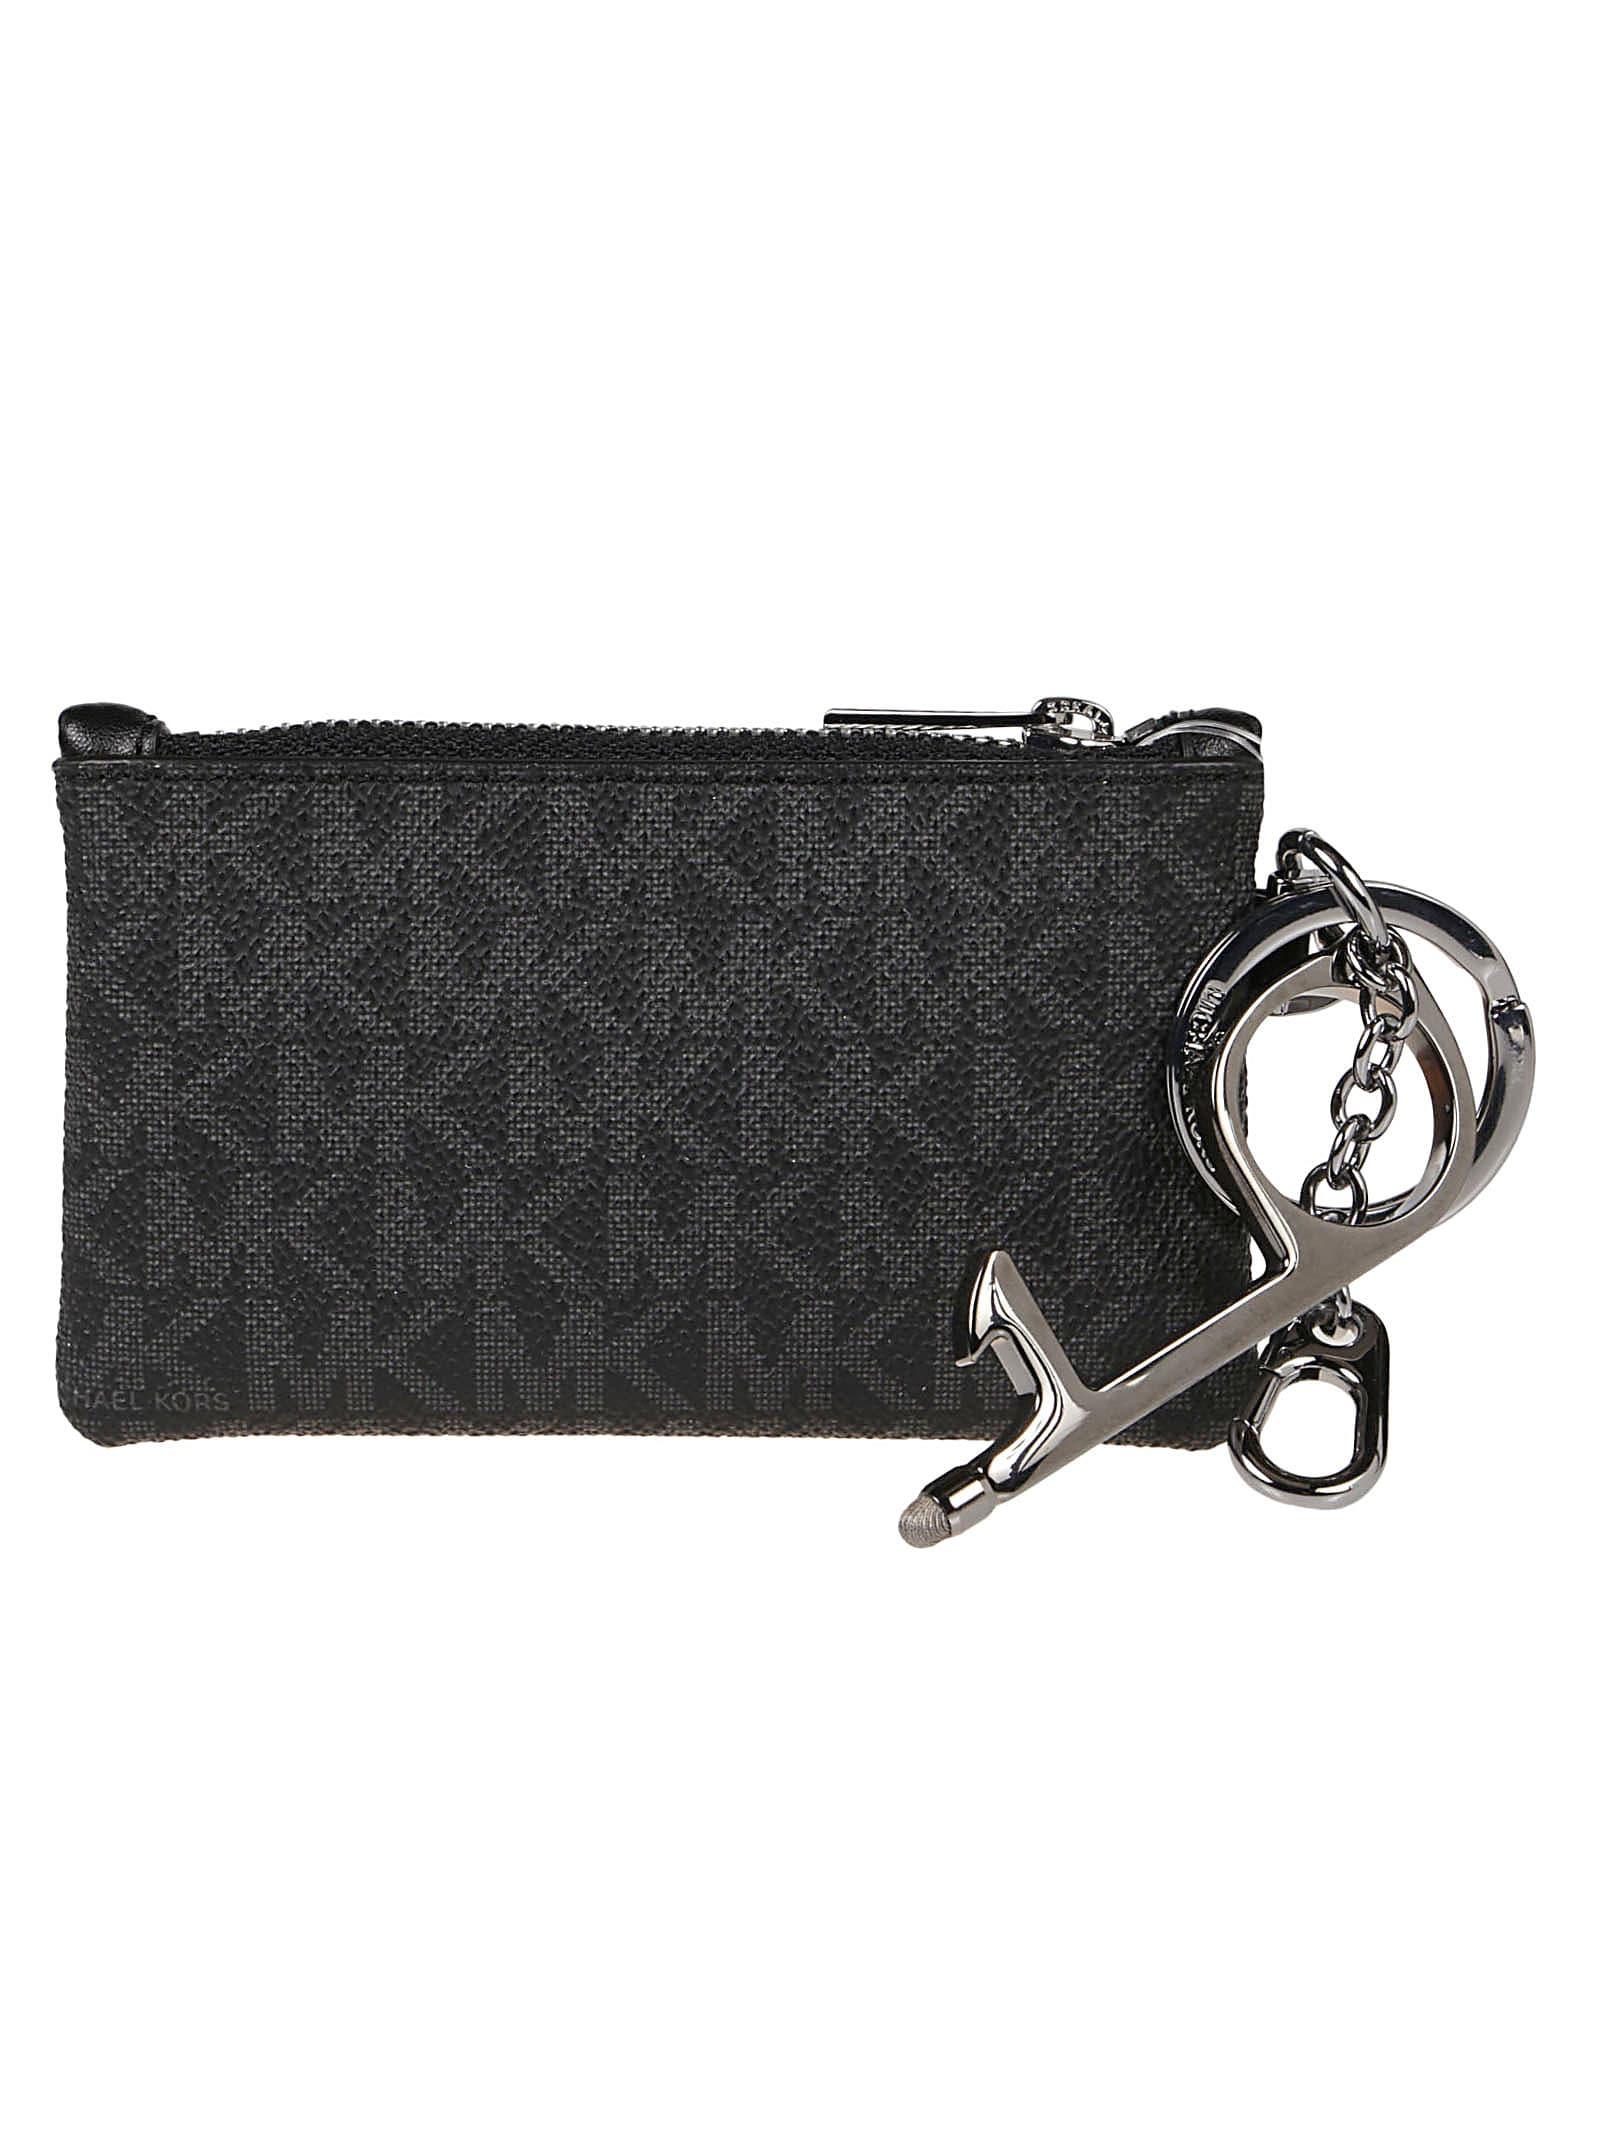 NEW Michael Kors Parker Medium Leather Crossbody Bag with box | Leather  crossbody bag, Michael kors, Leather crossbody